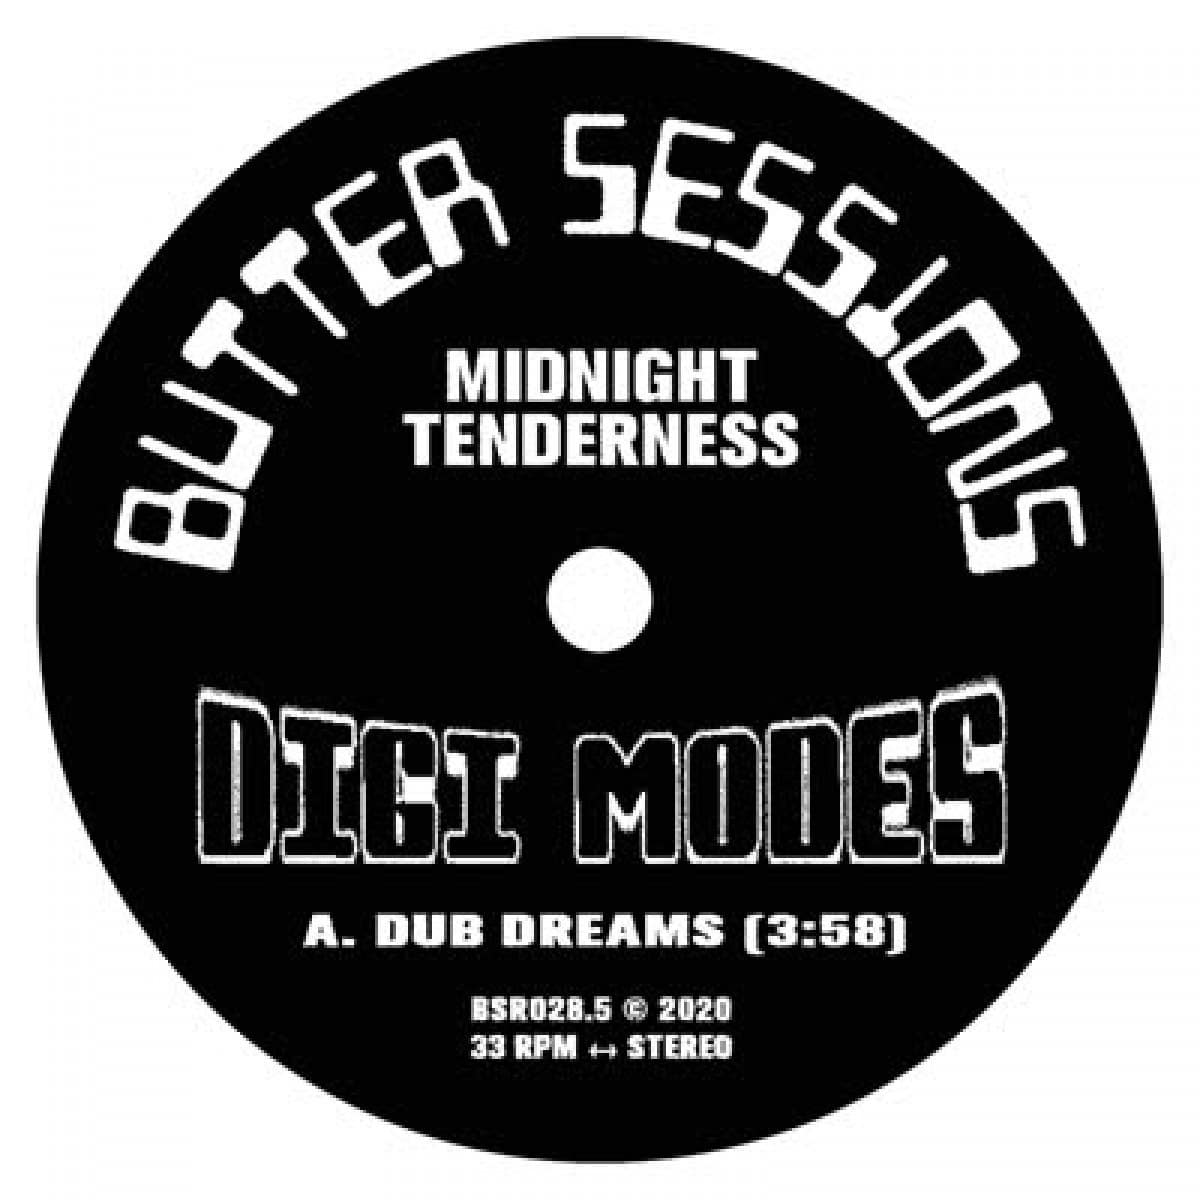 Midnight Tenderness - Digi Modes - BSR0285 - BUTTER SESSIONS